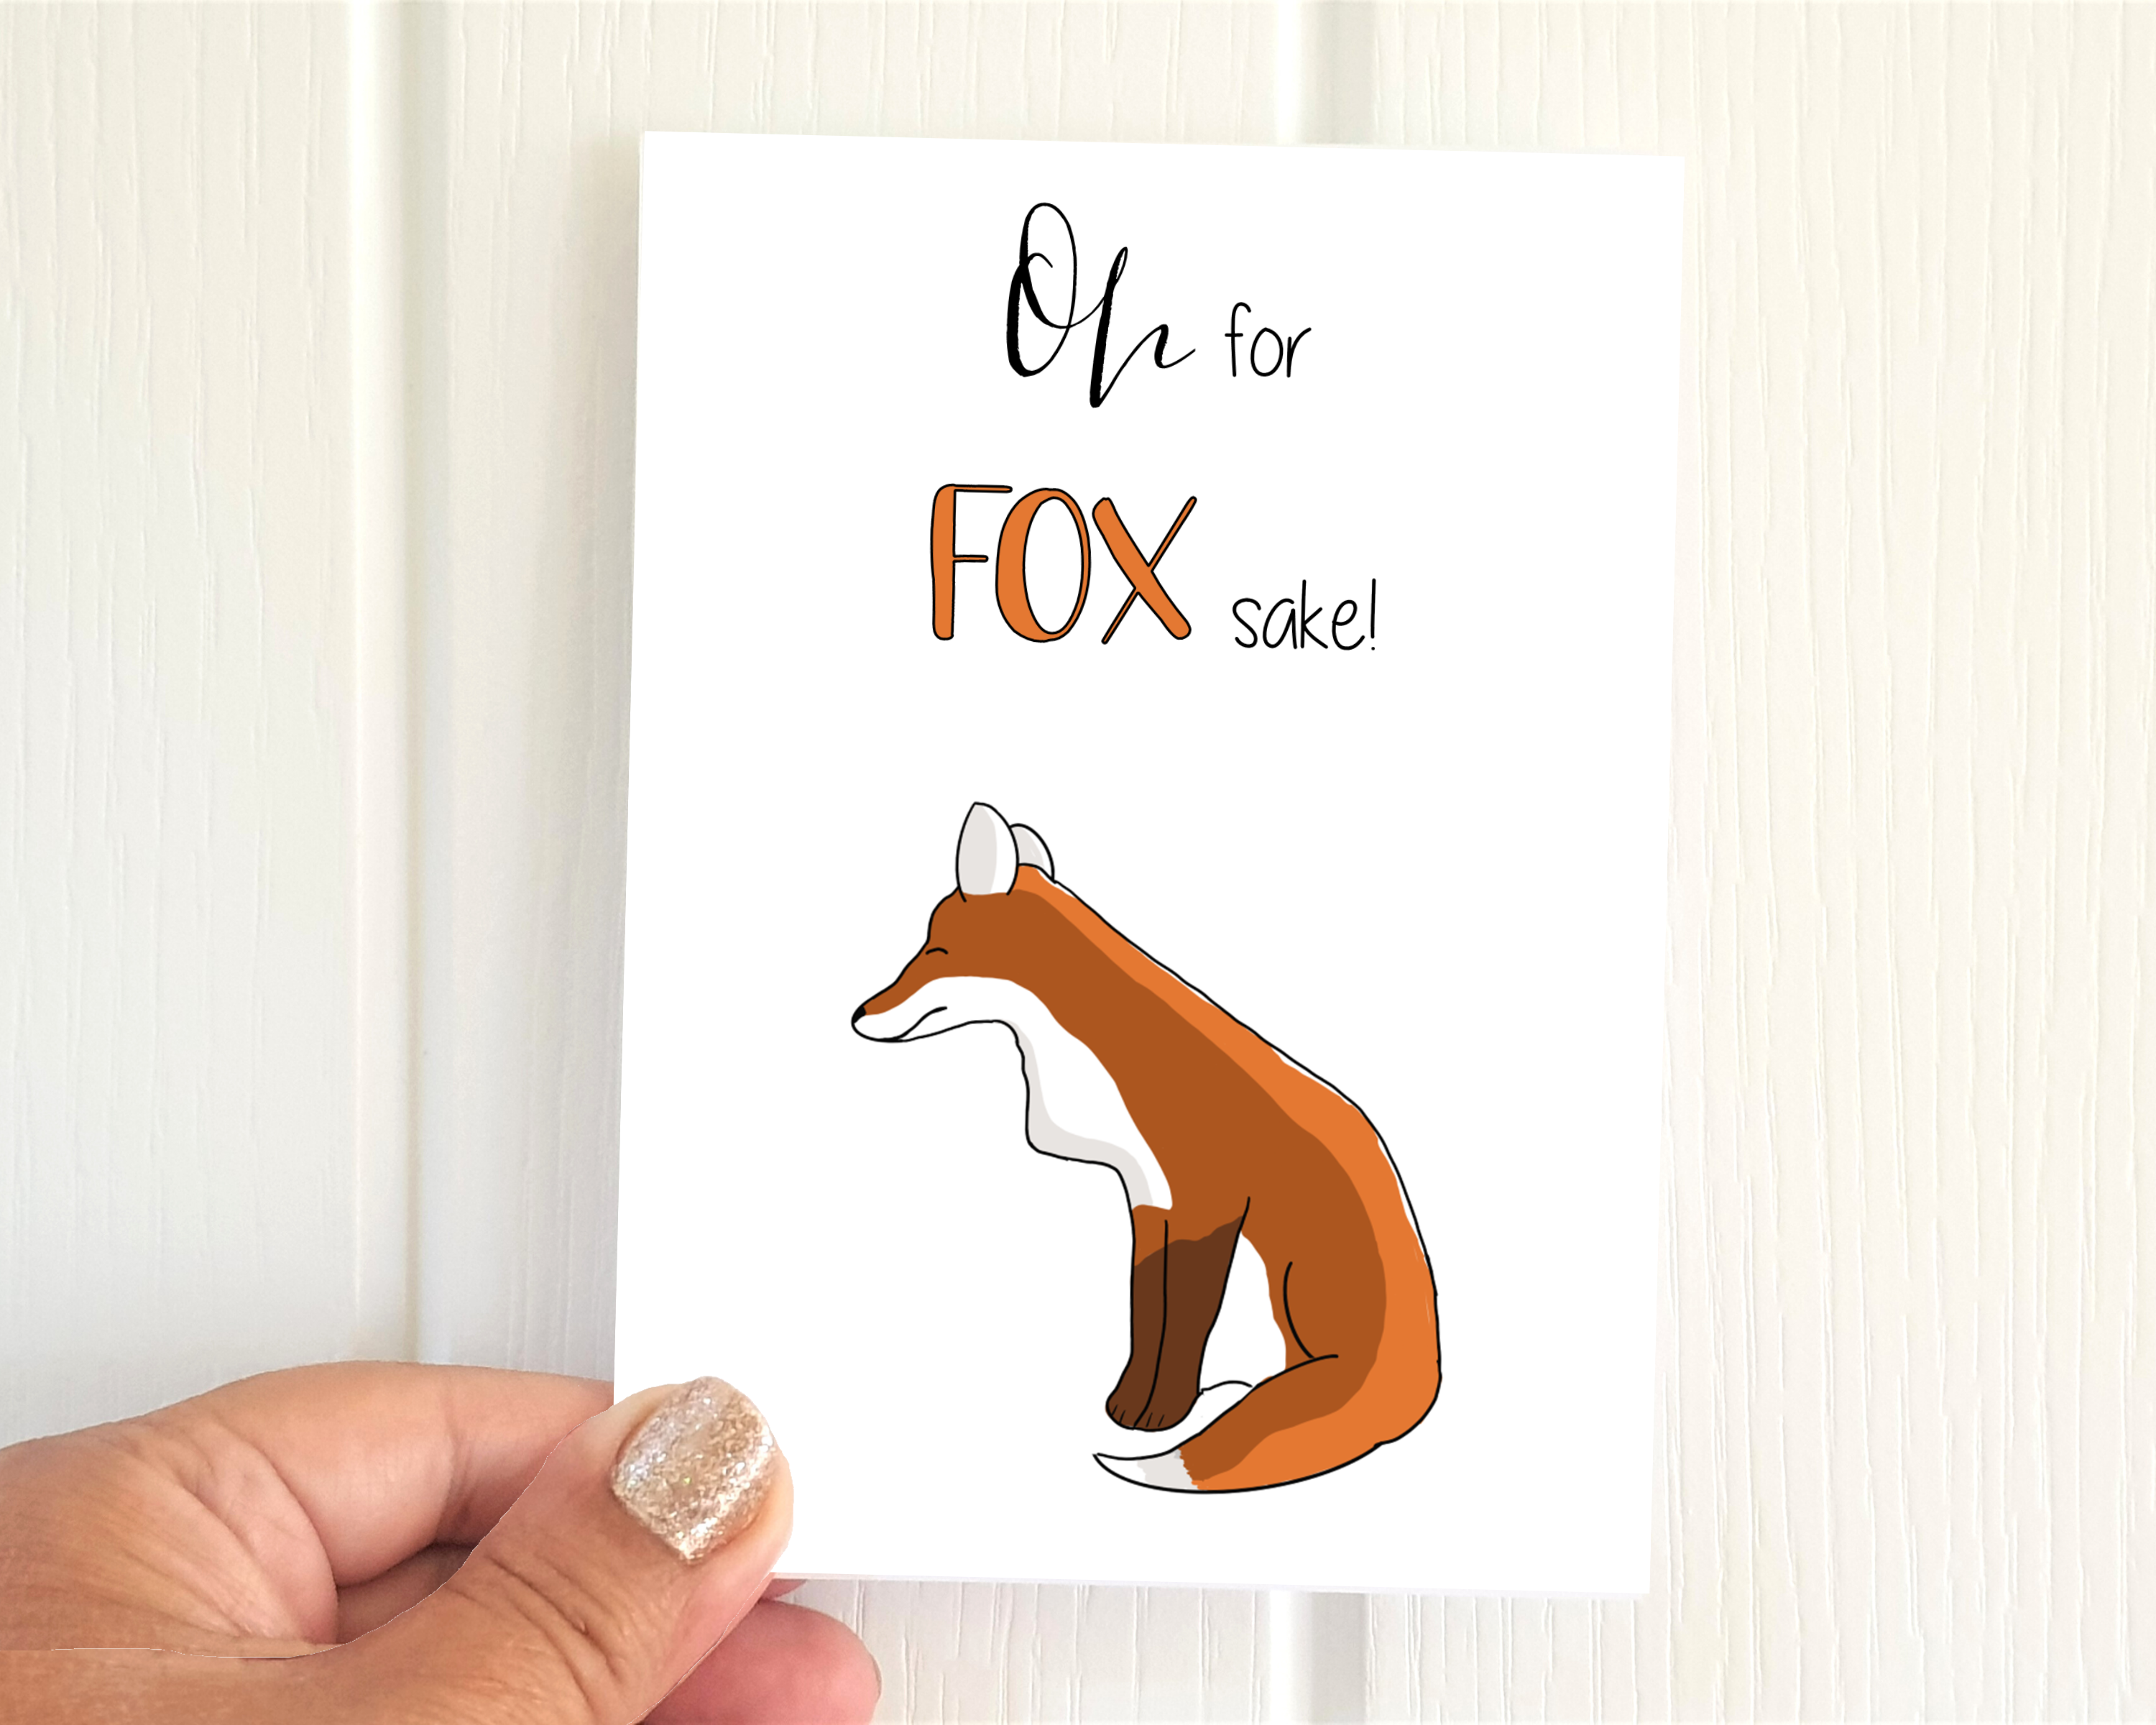 Sly fox illustration A6 'Oh for fox sake!' pack of 6 Poppleberry funny rude animal postcards.